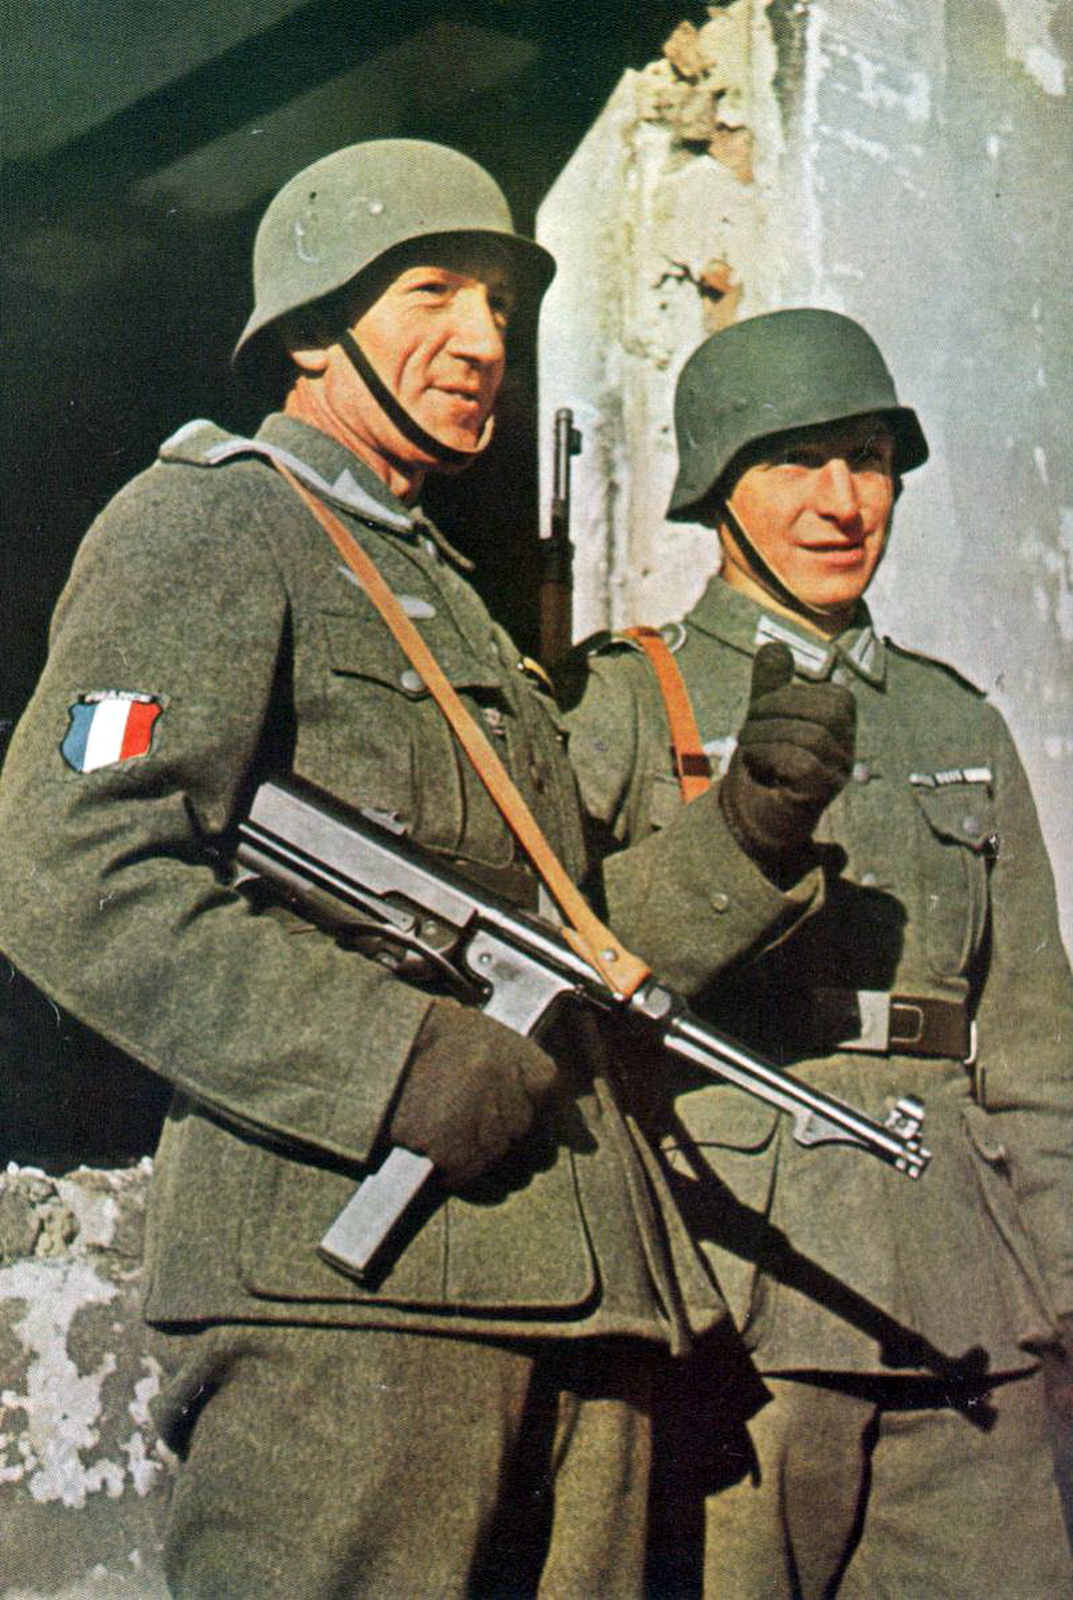 División Azul y orgullo de ser español - Página 4 Soldiers of the Légion des Volontaires Français, when still part of the Wehrmacht